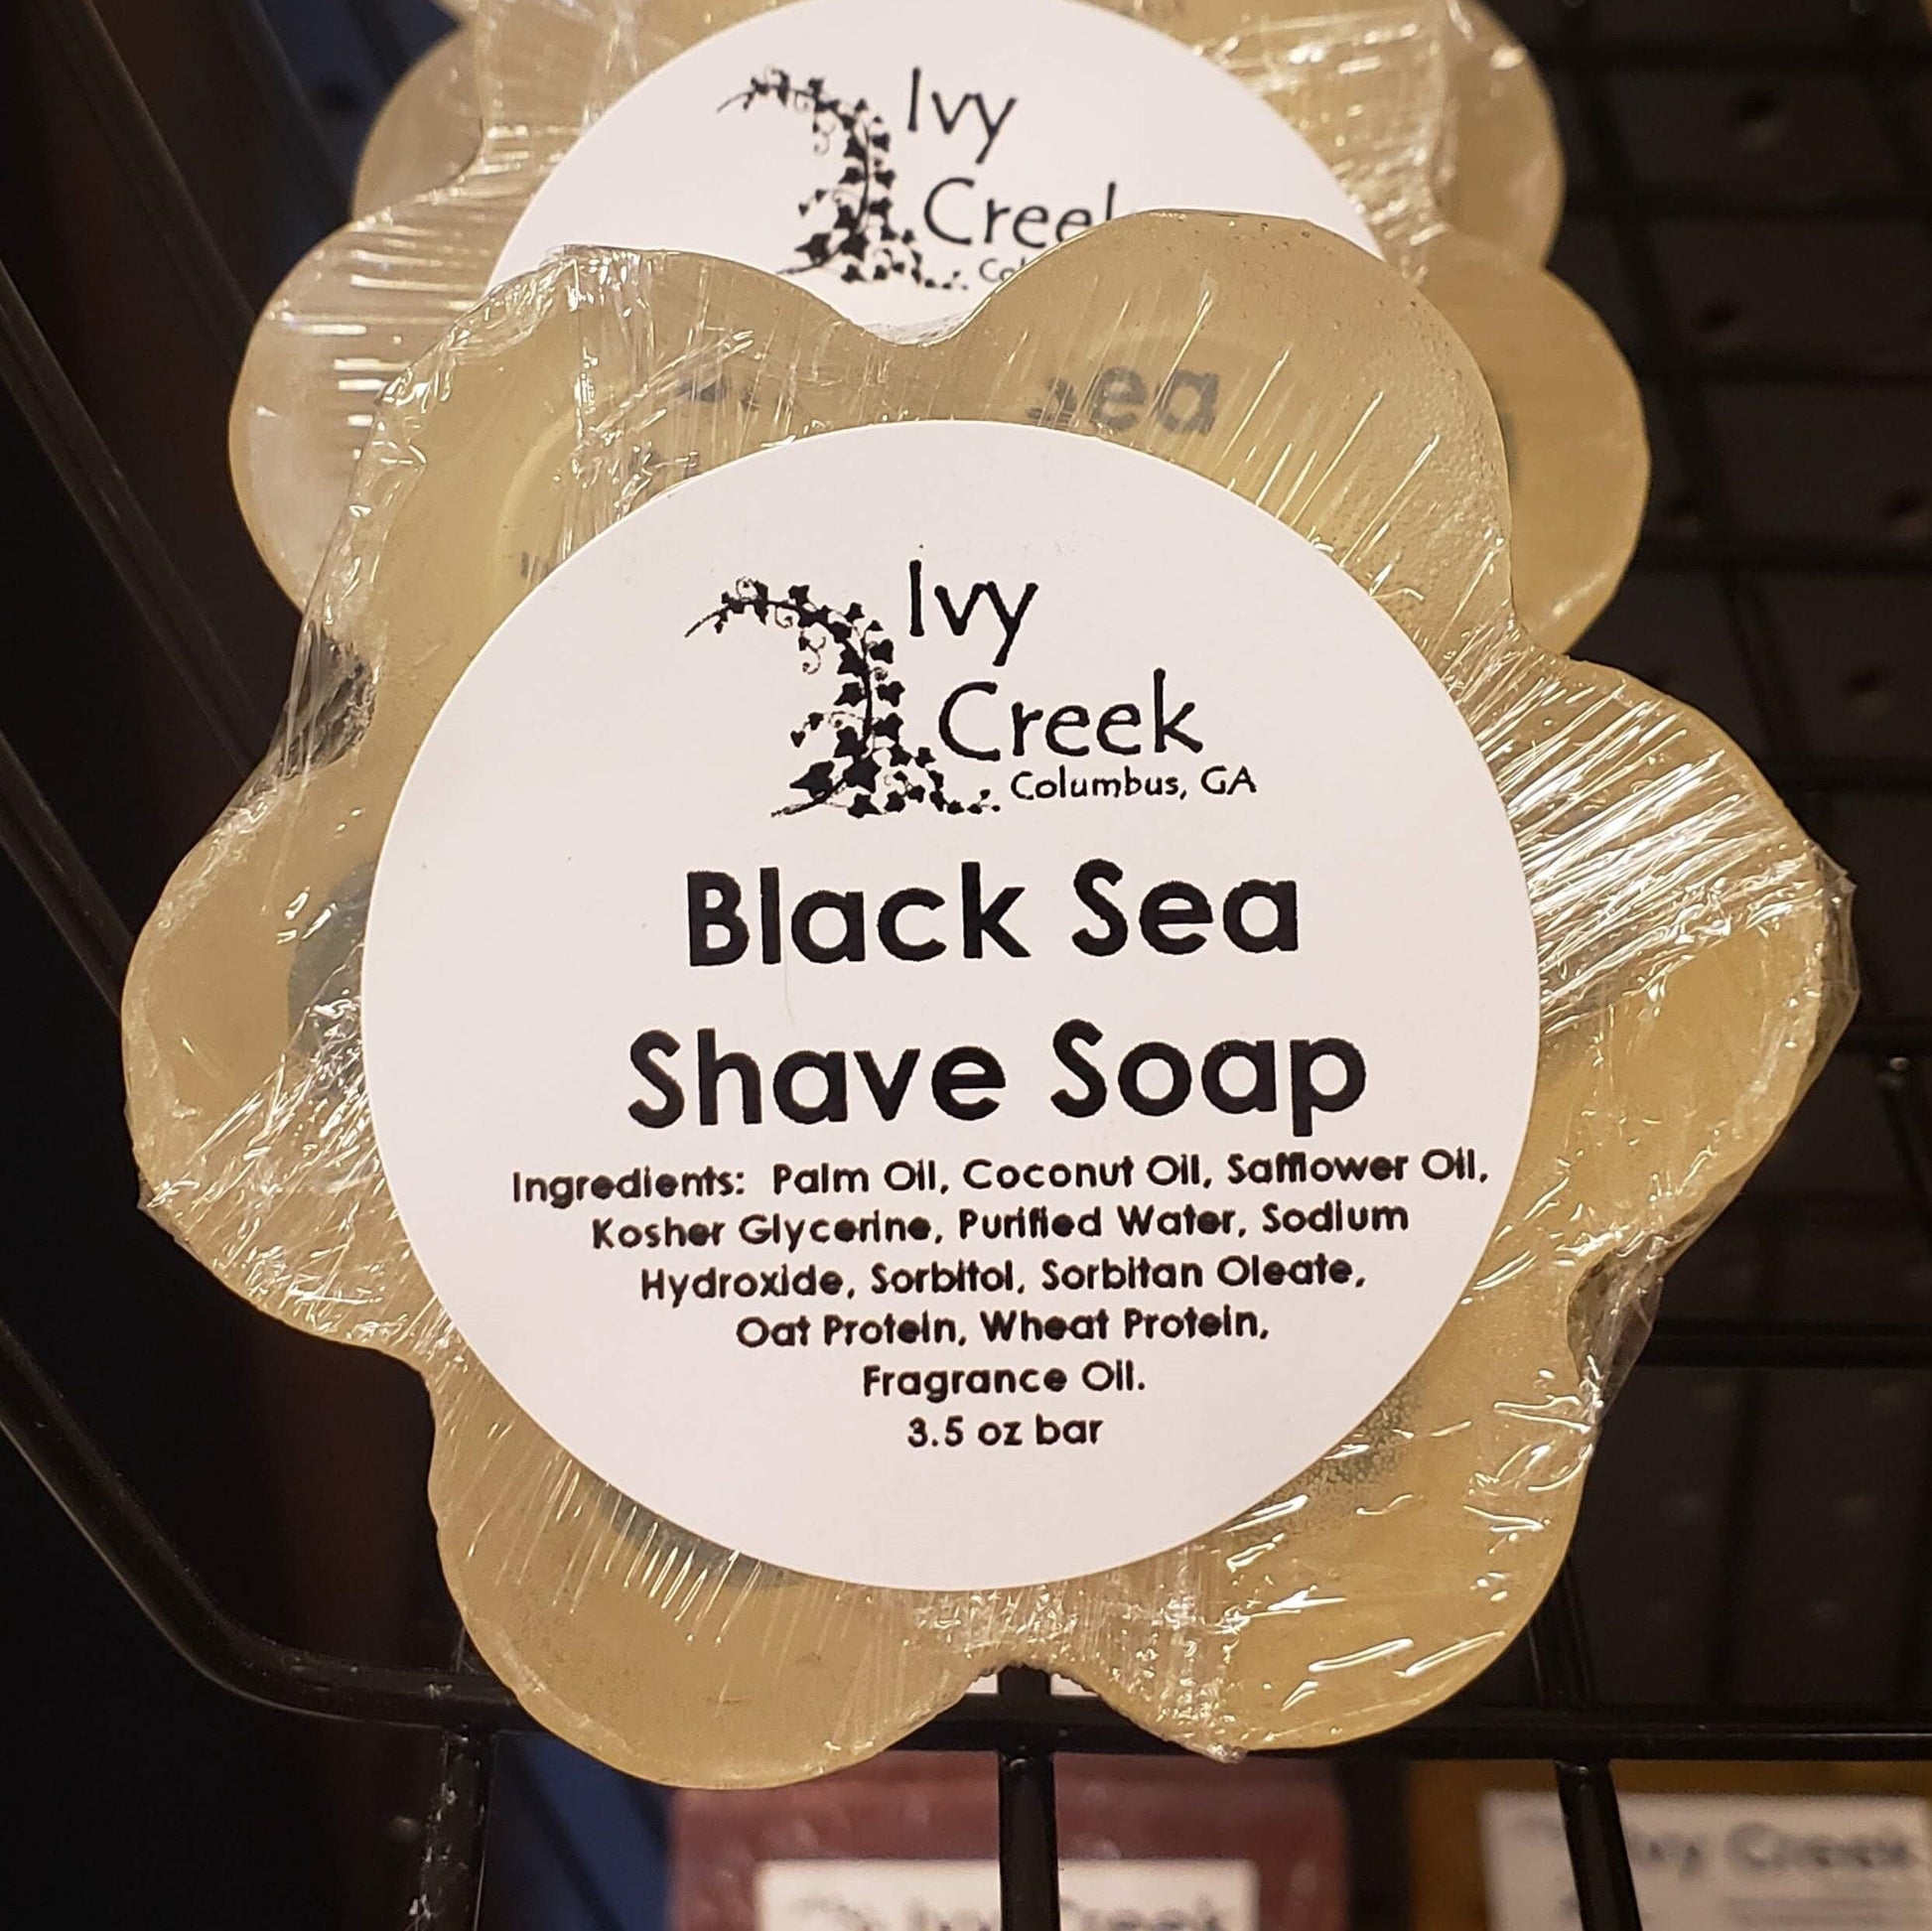 Ivy Creek Black Sea Shave Soap - Glycerin-based, Sweet and Salty Ocean Scent, Prevents Razor Burn, 3.5 oz